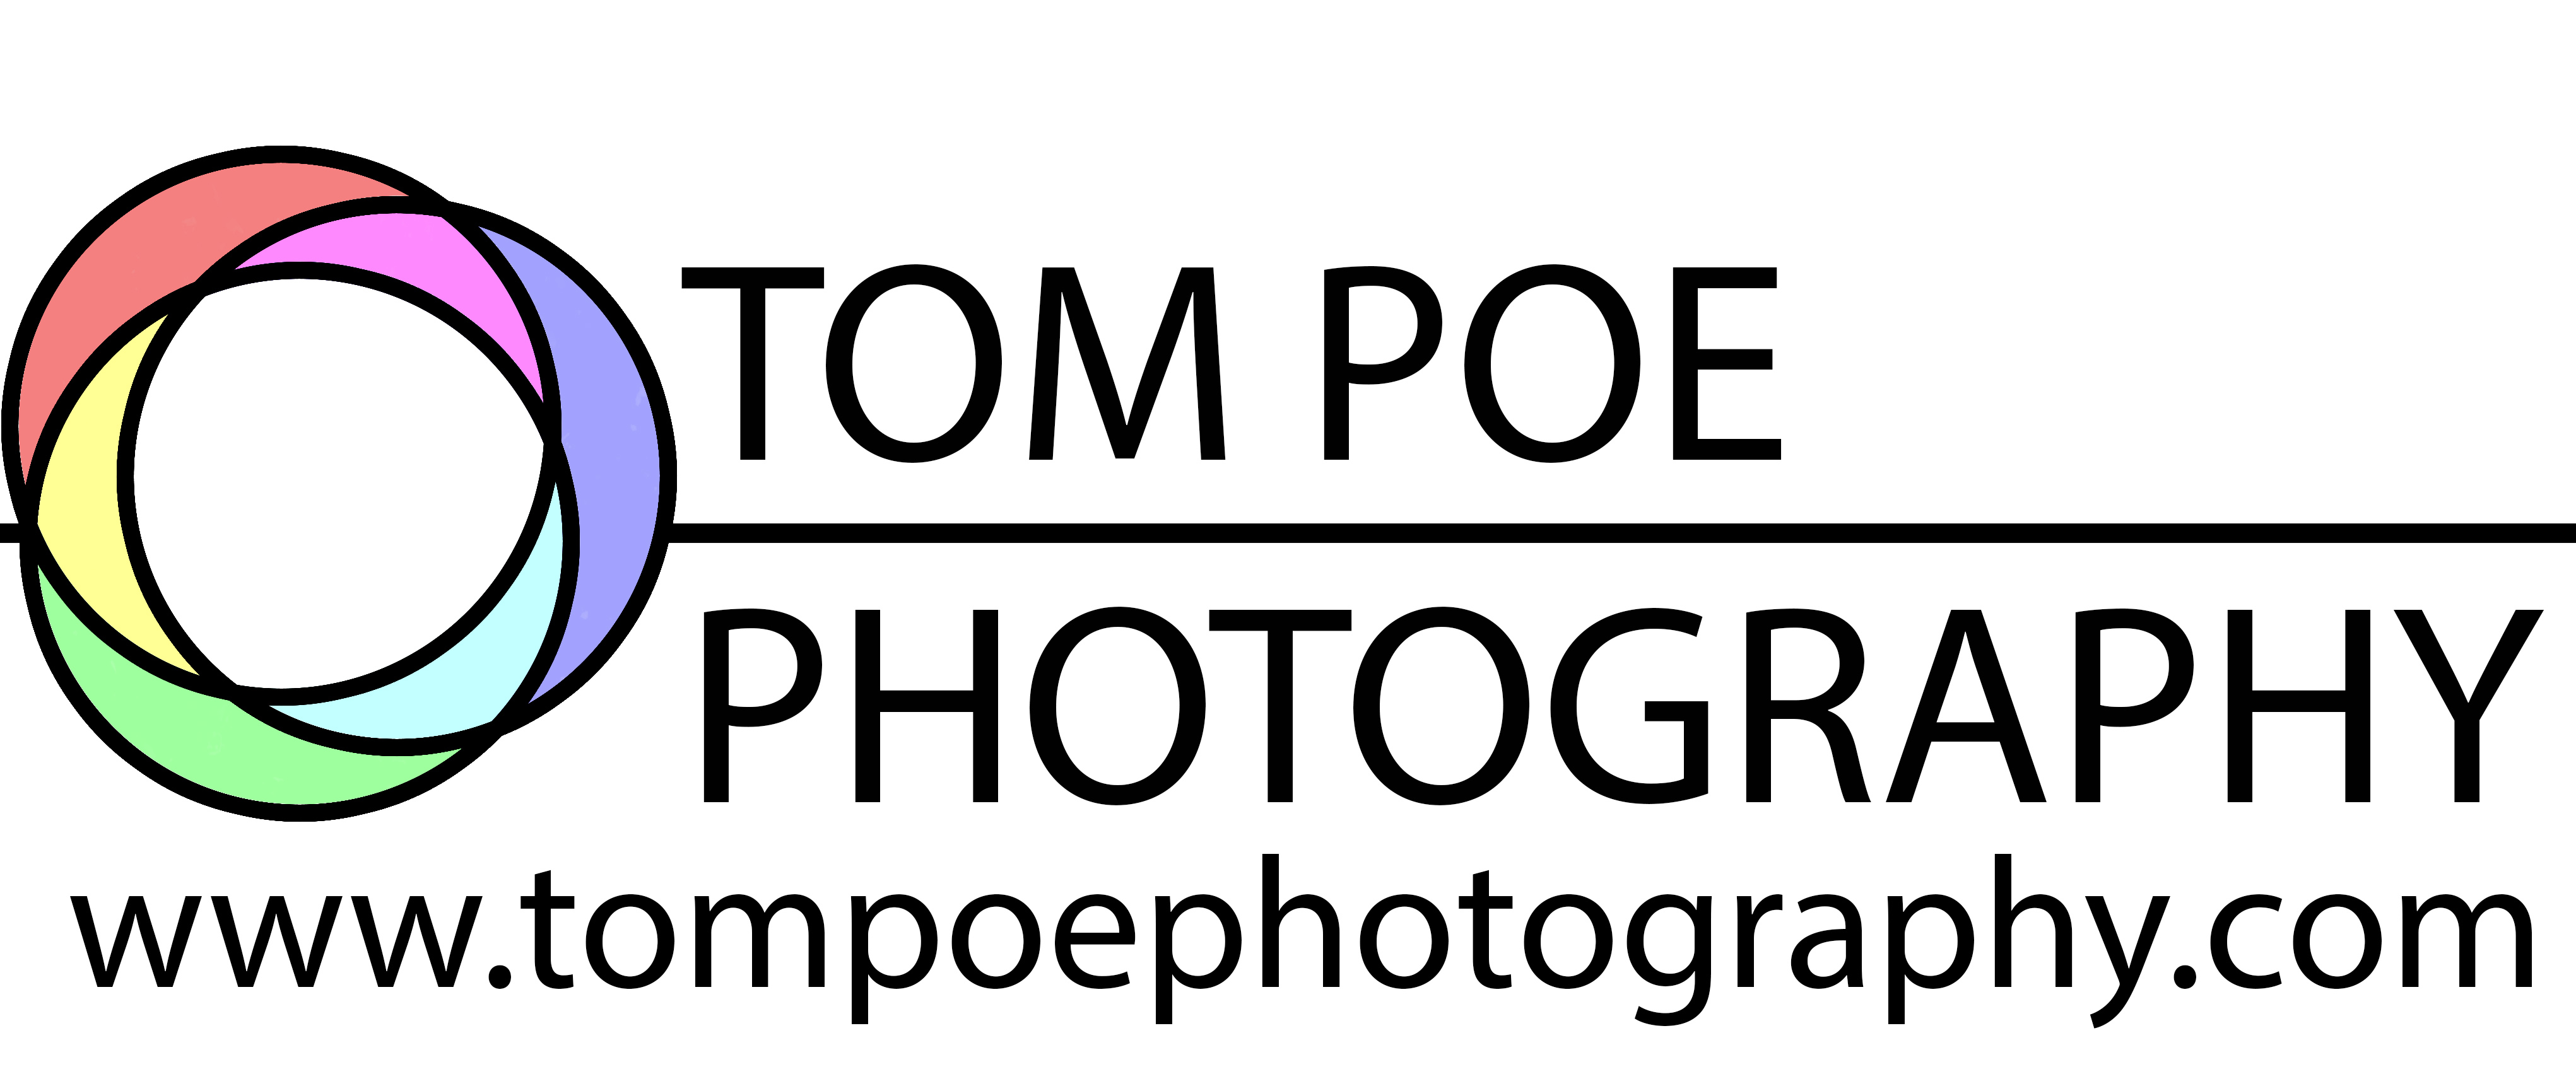 Tom Poe Photography